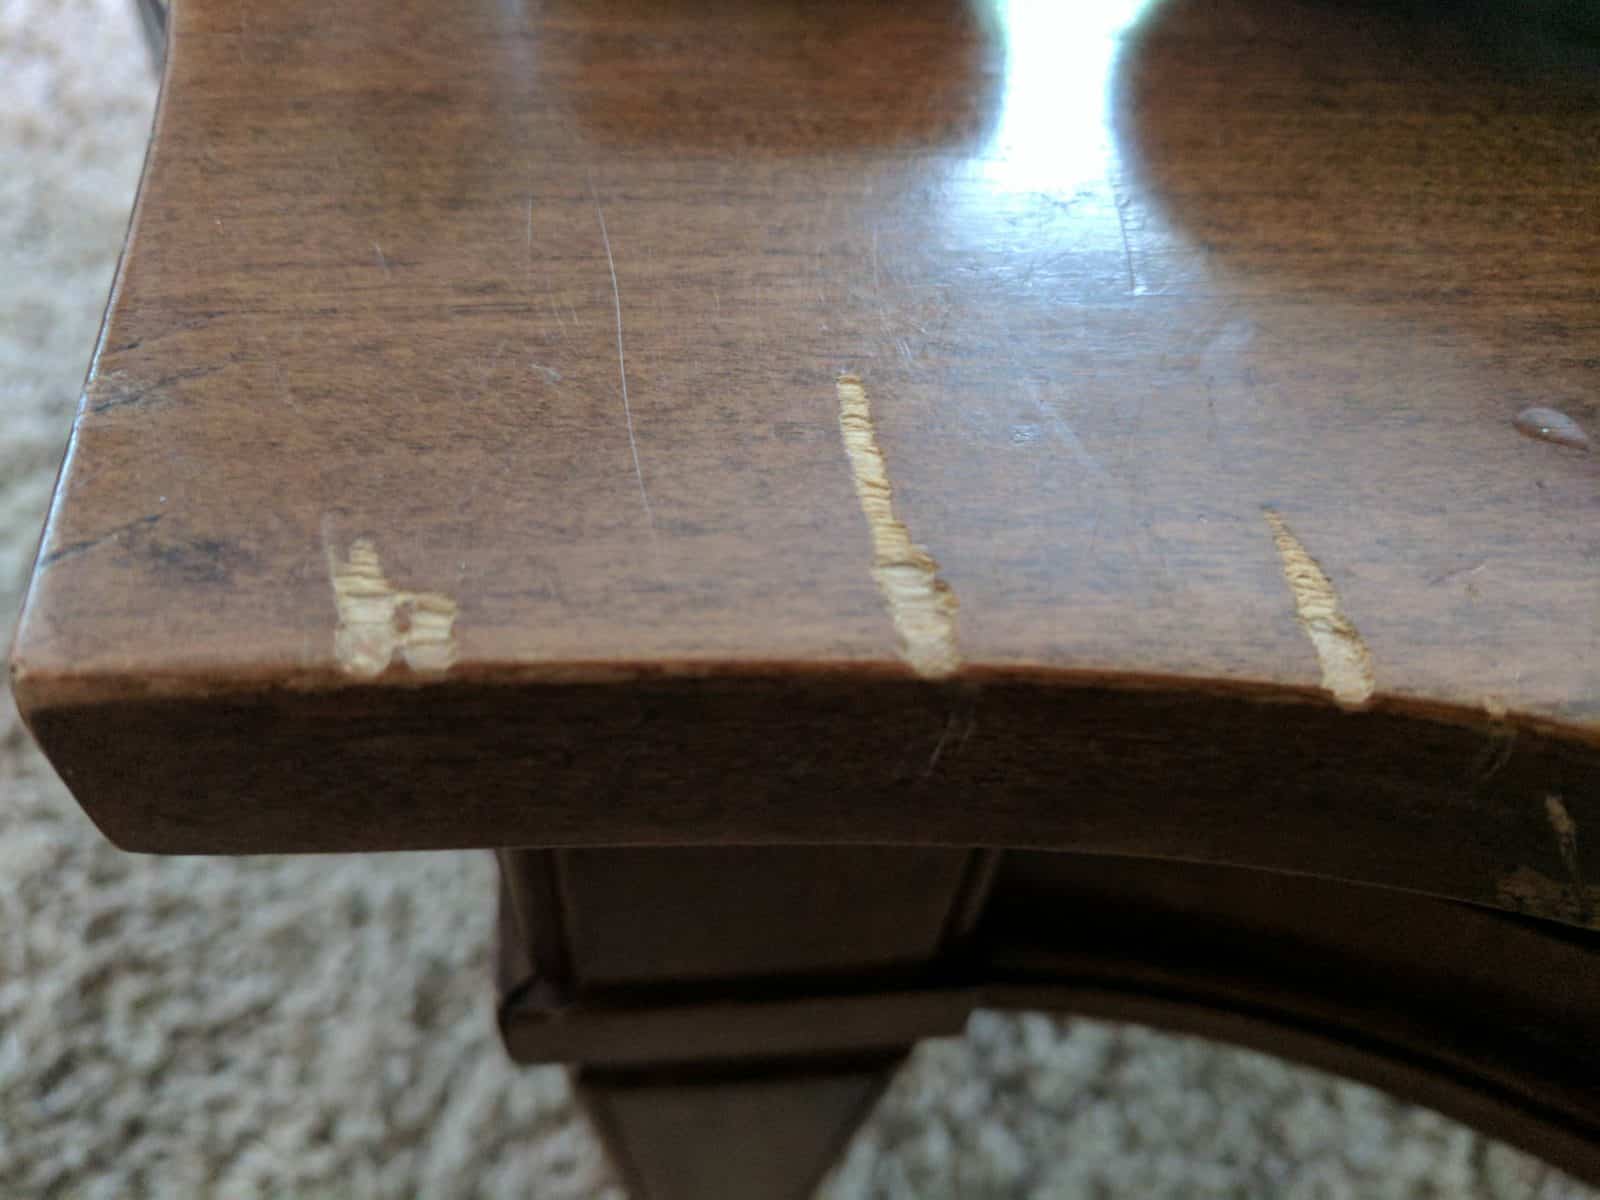 deep scratch on wood desk